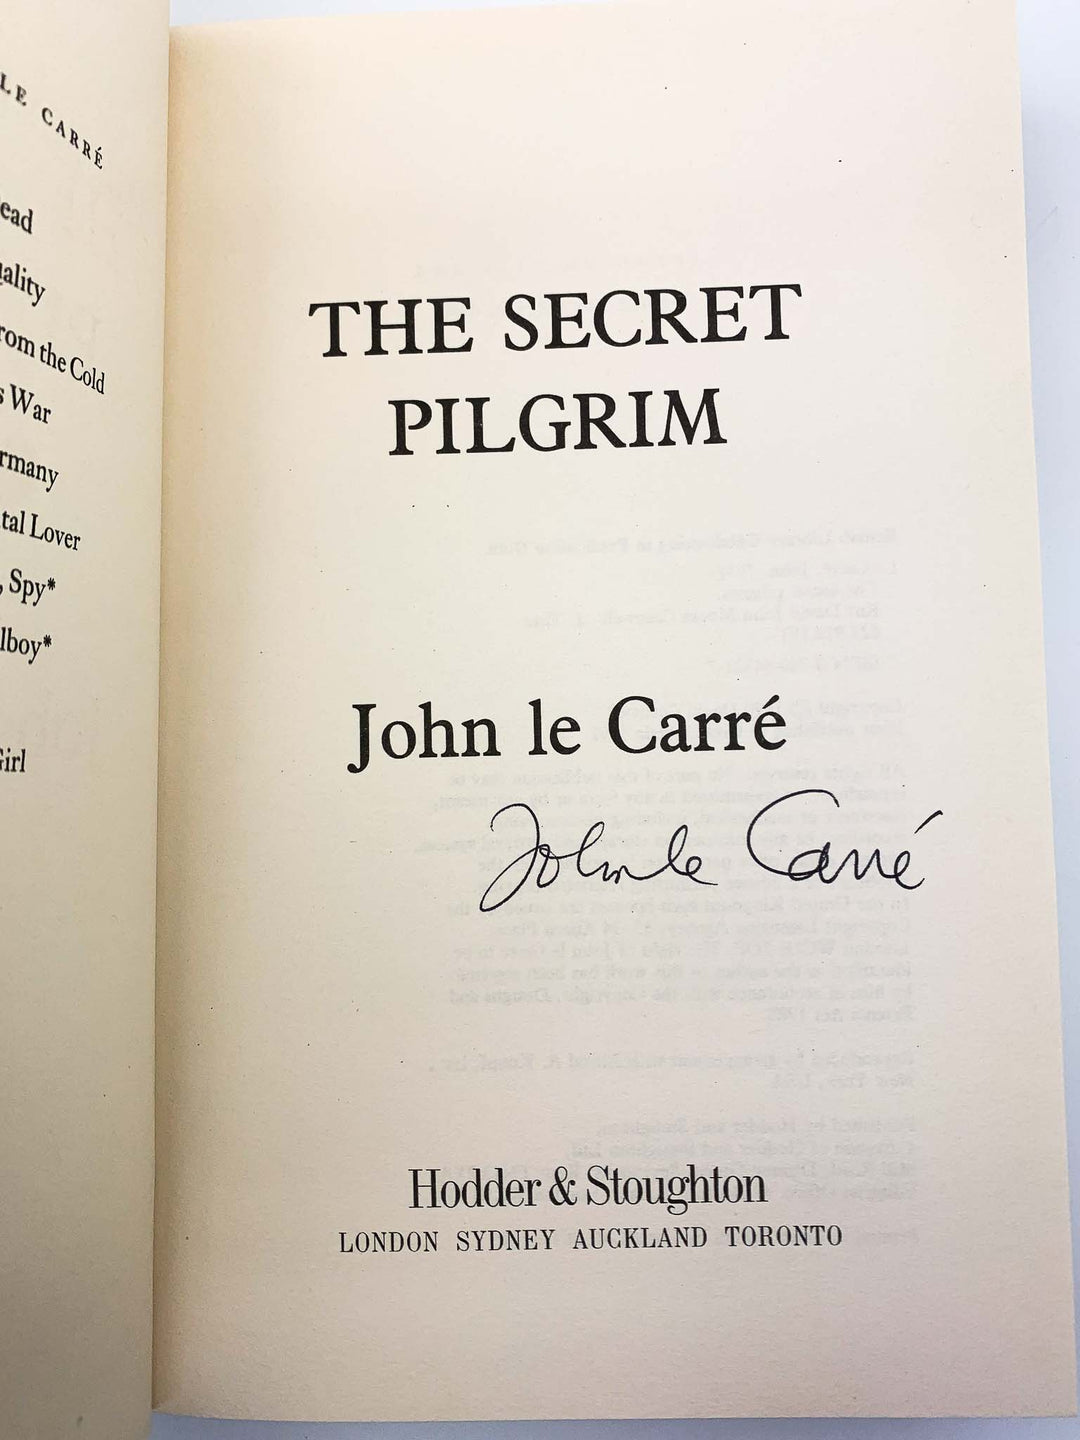 Le Carre, John - The Secret Pilgrim - SIGNED | signature page